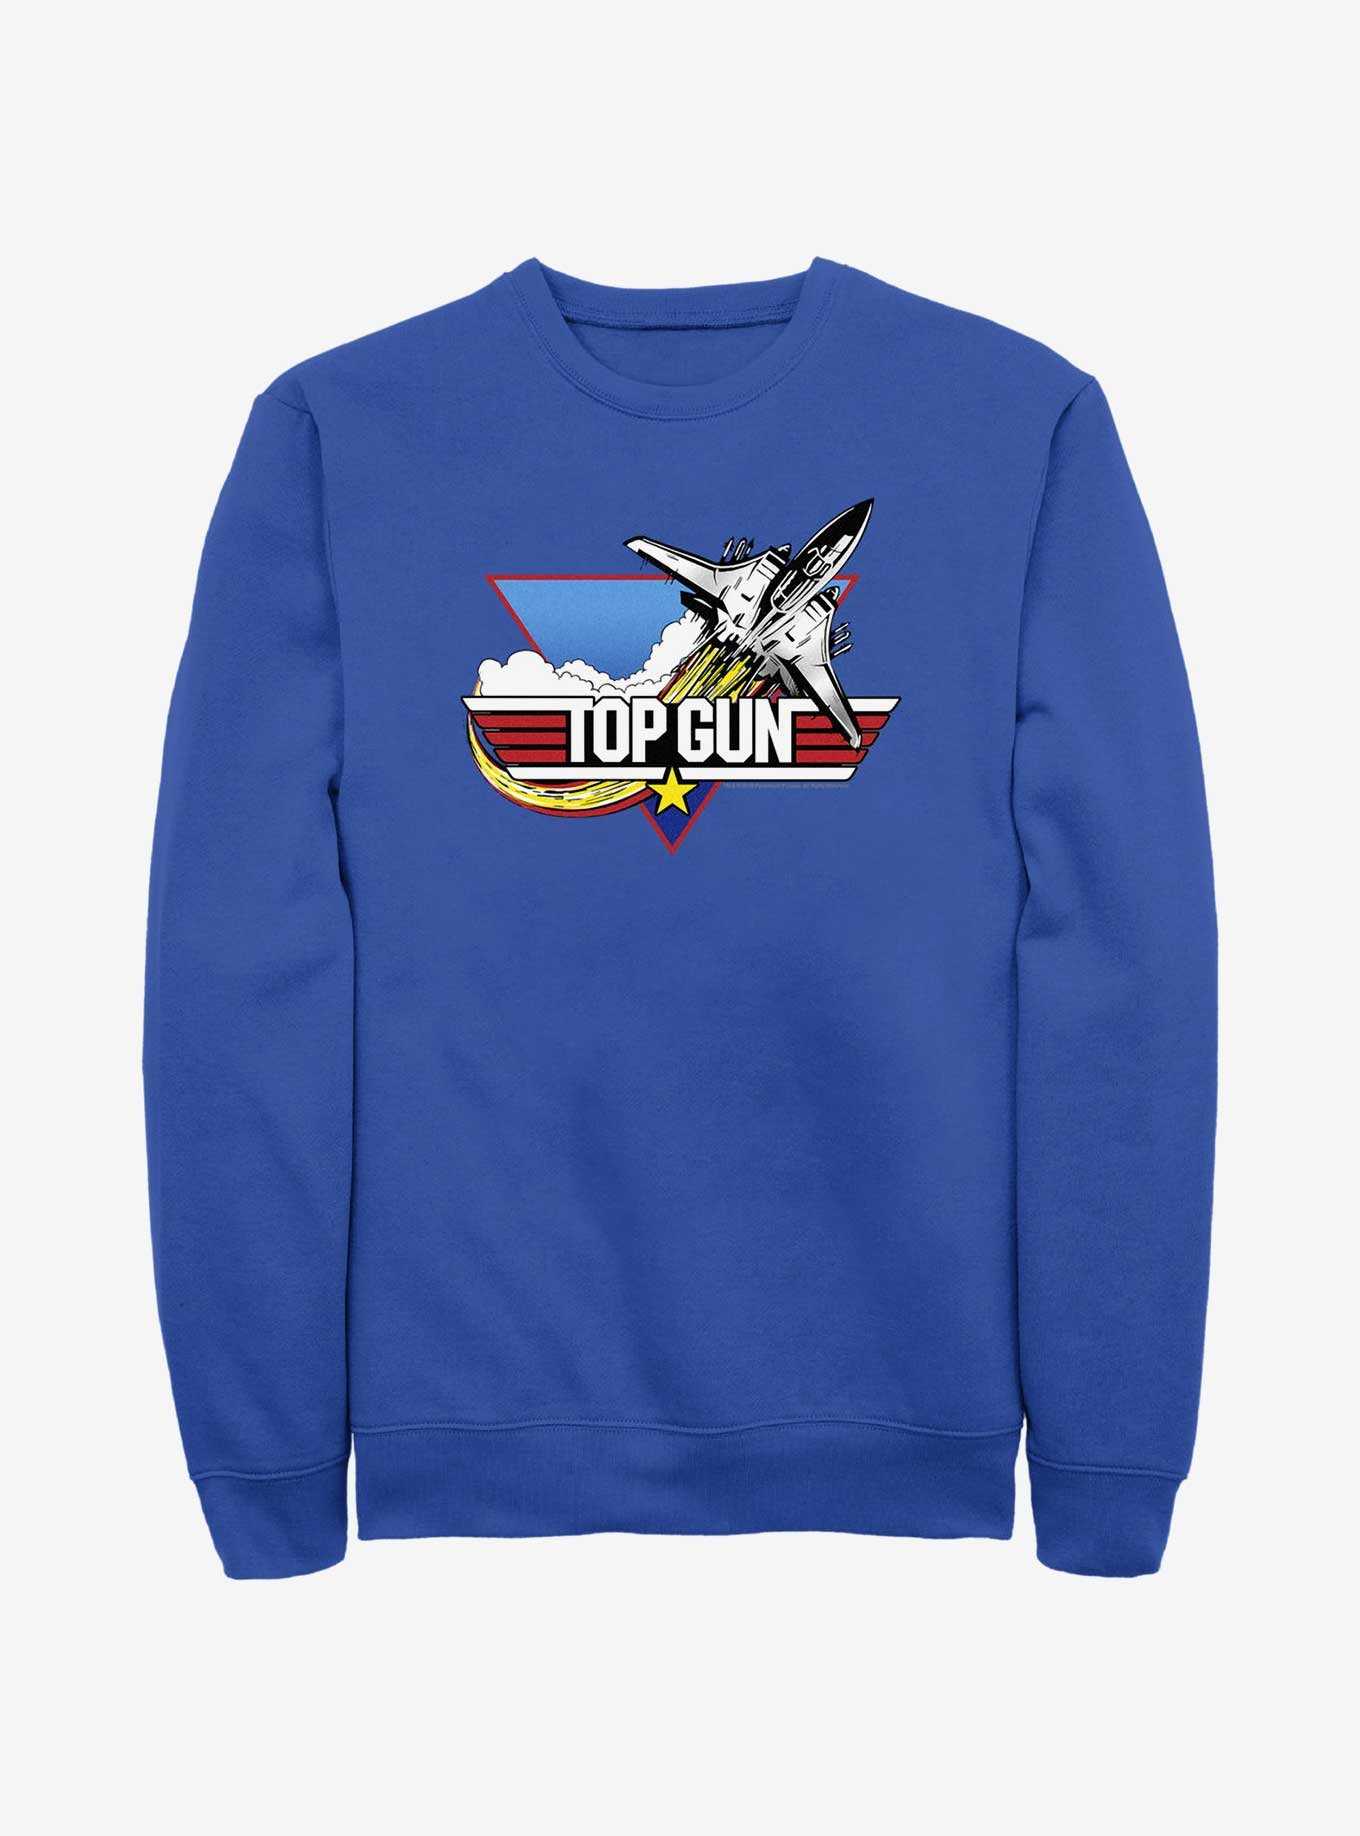 OFFICIAL Top Gun & Hot | Topic Sweaters Hoodies